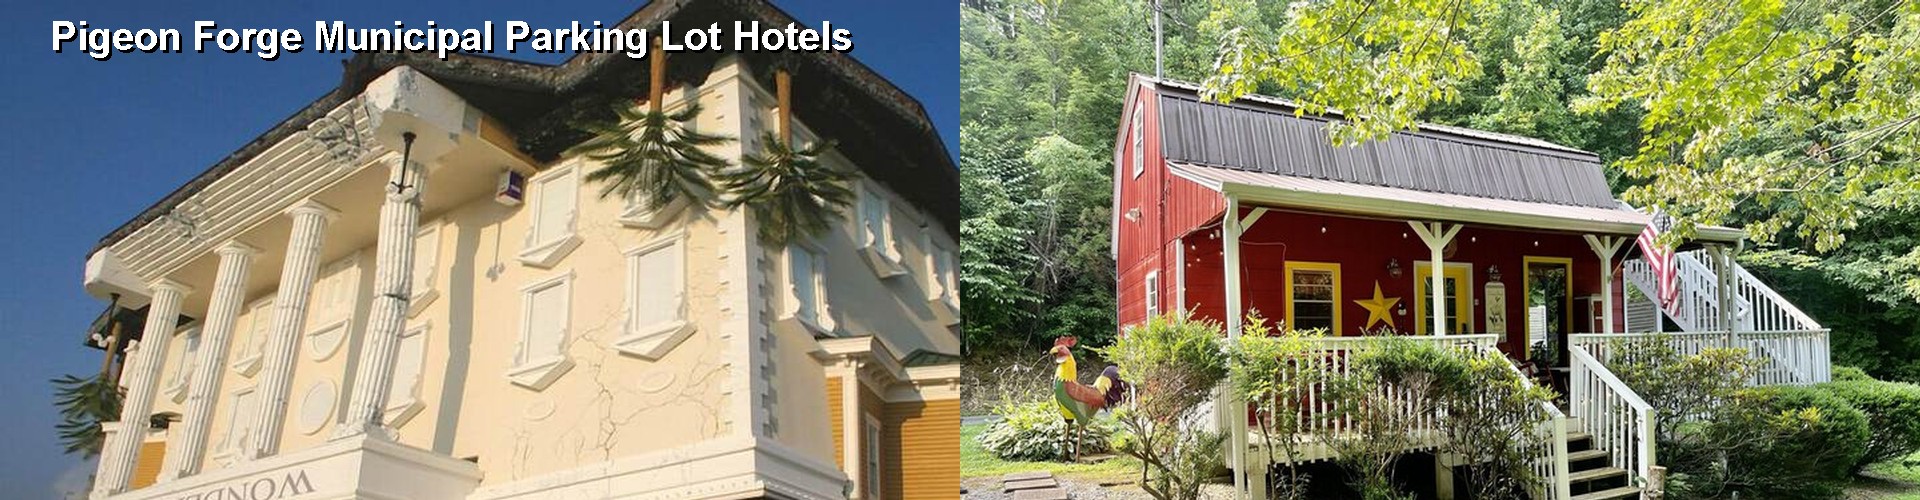 5 Best Hotels near Pigeon Forge Municipal Parking Lot